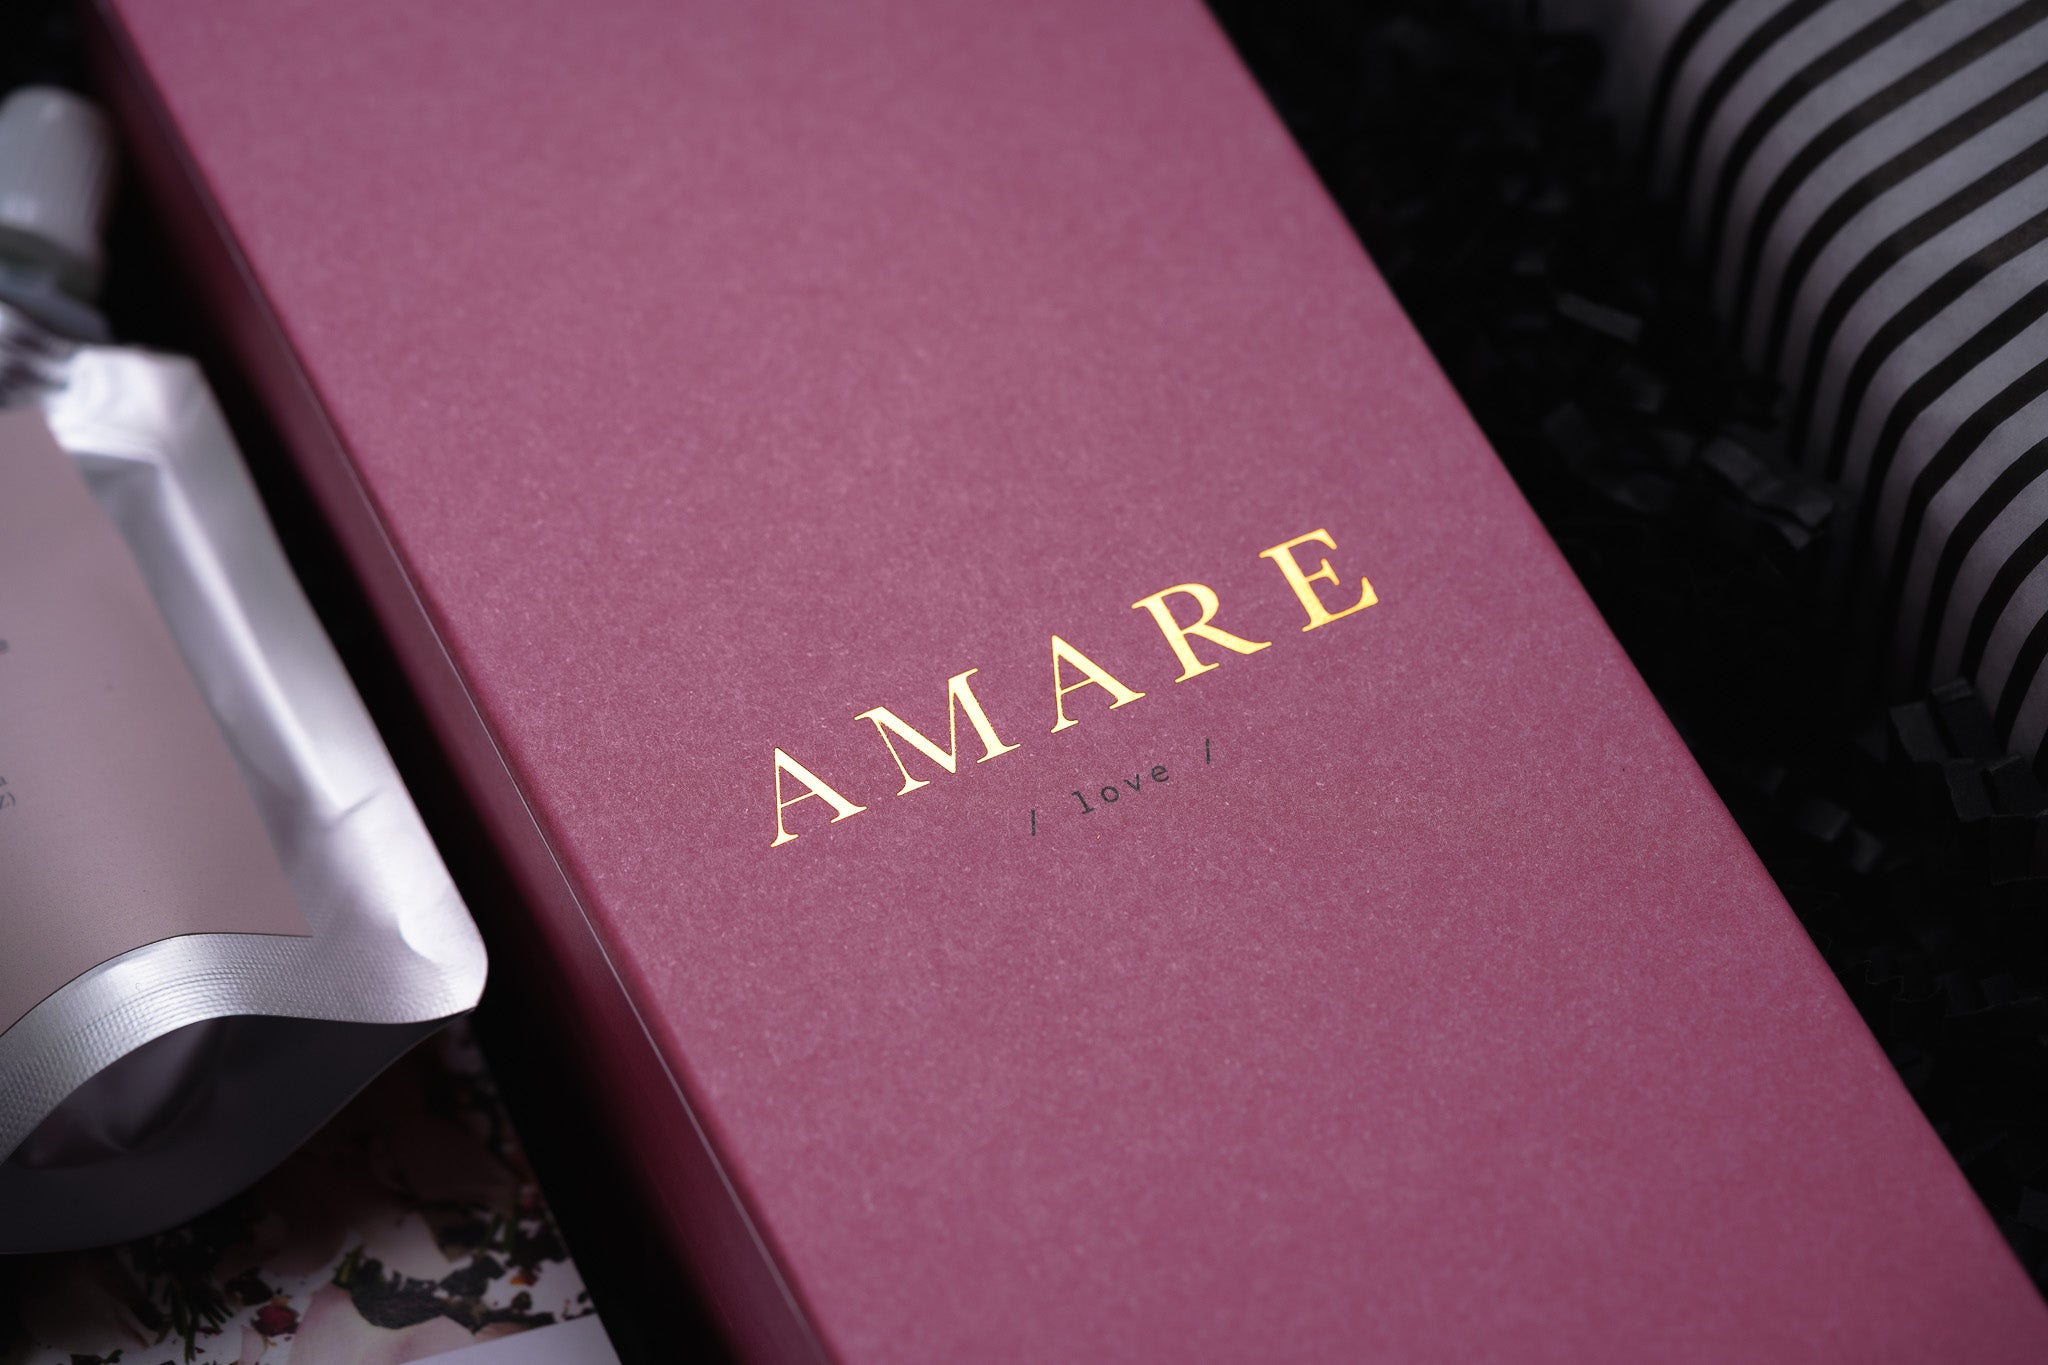 AMARE GIFT BOX